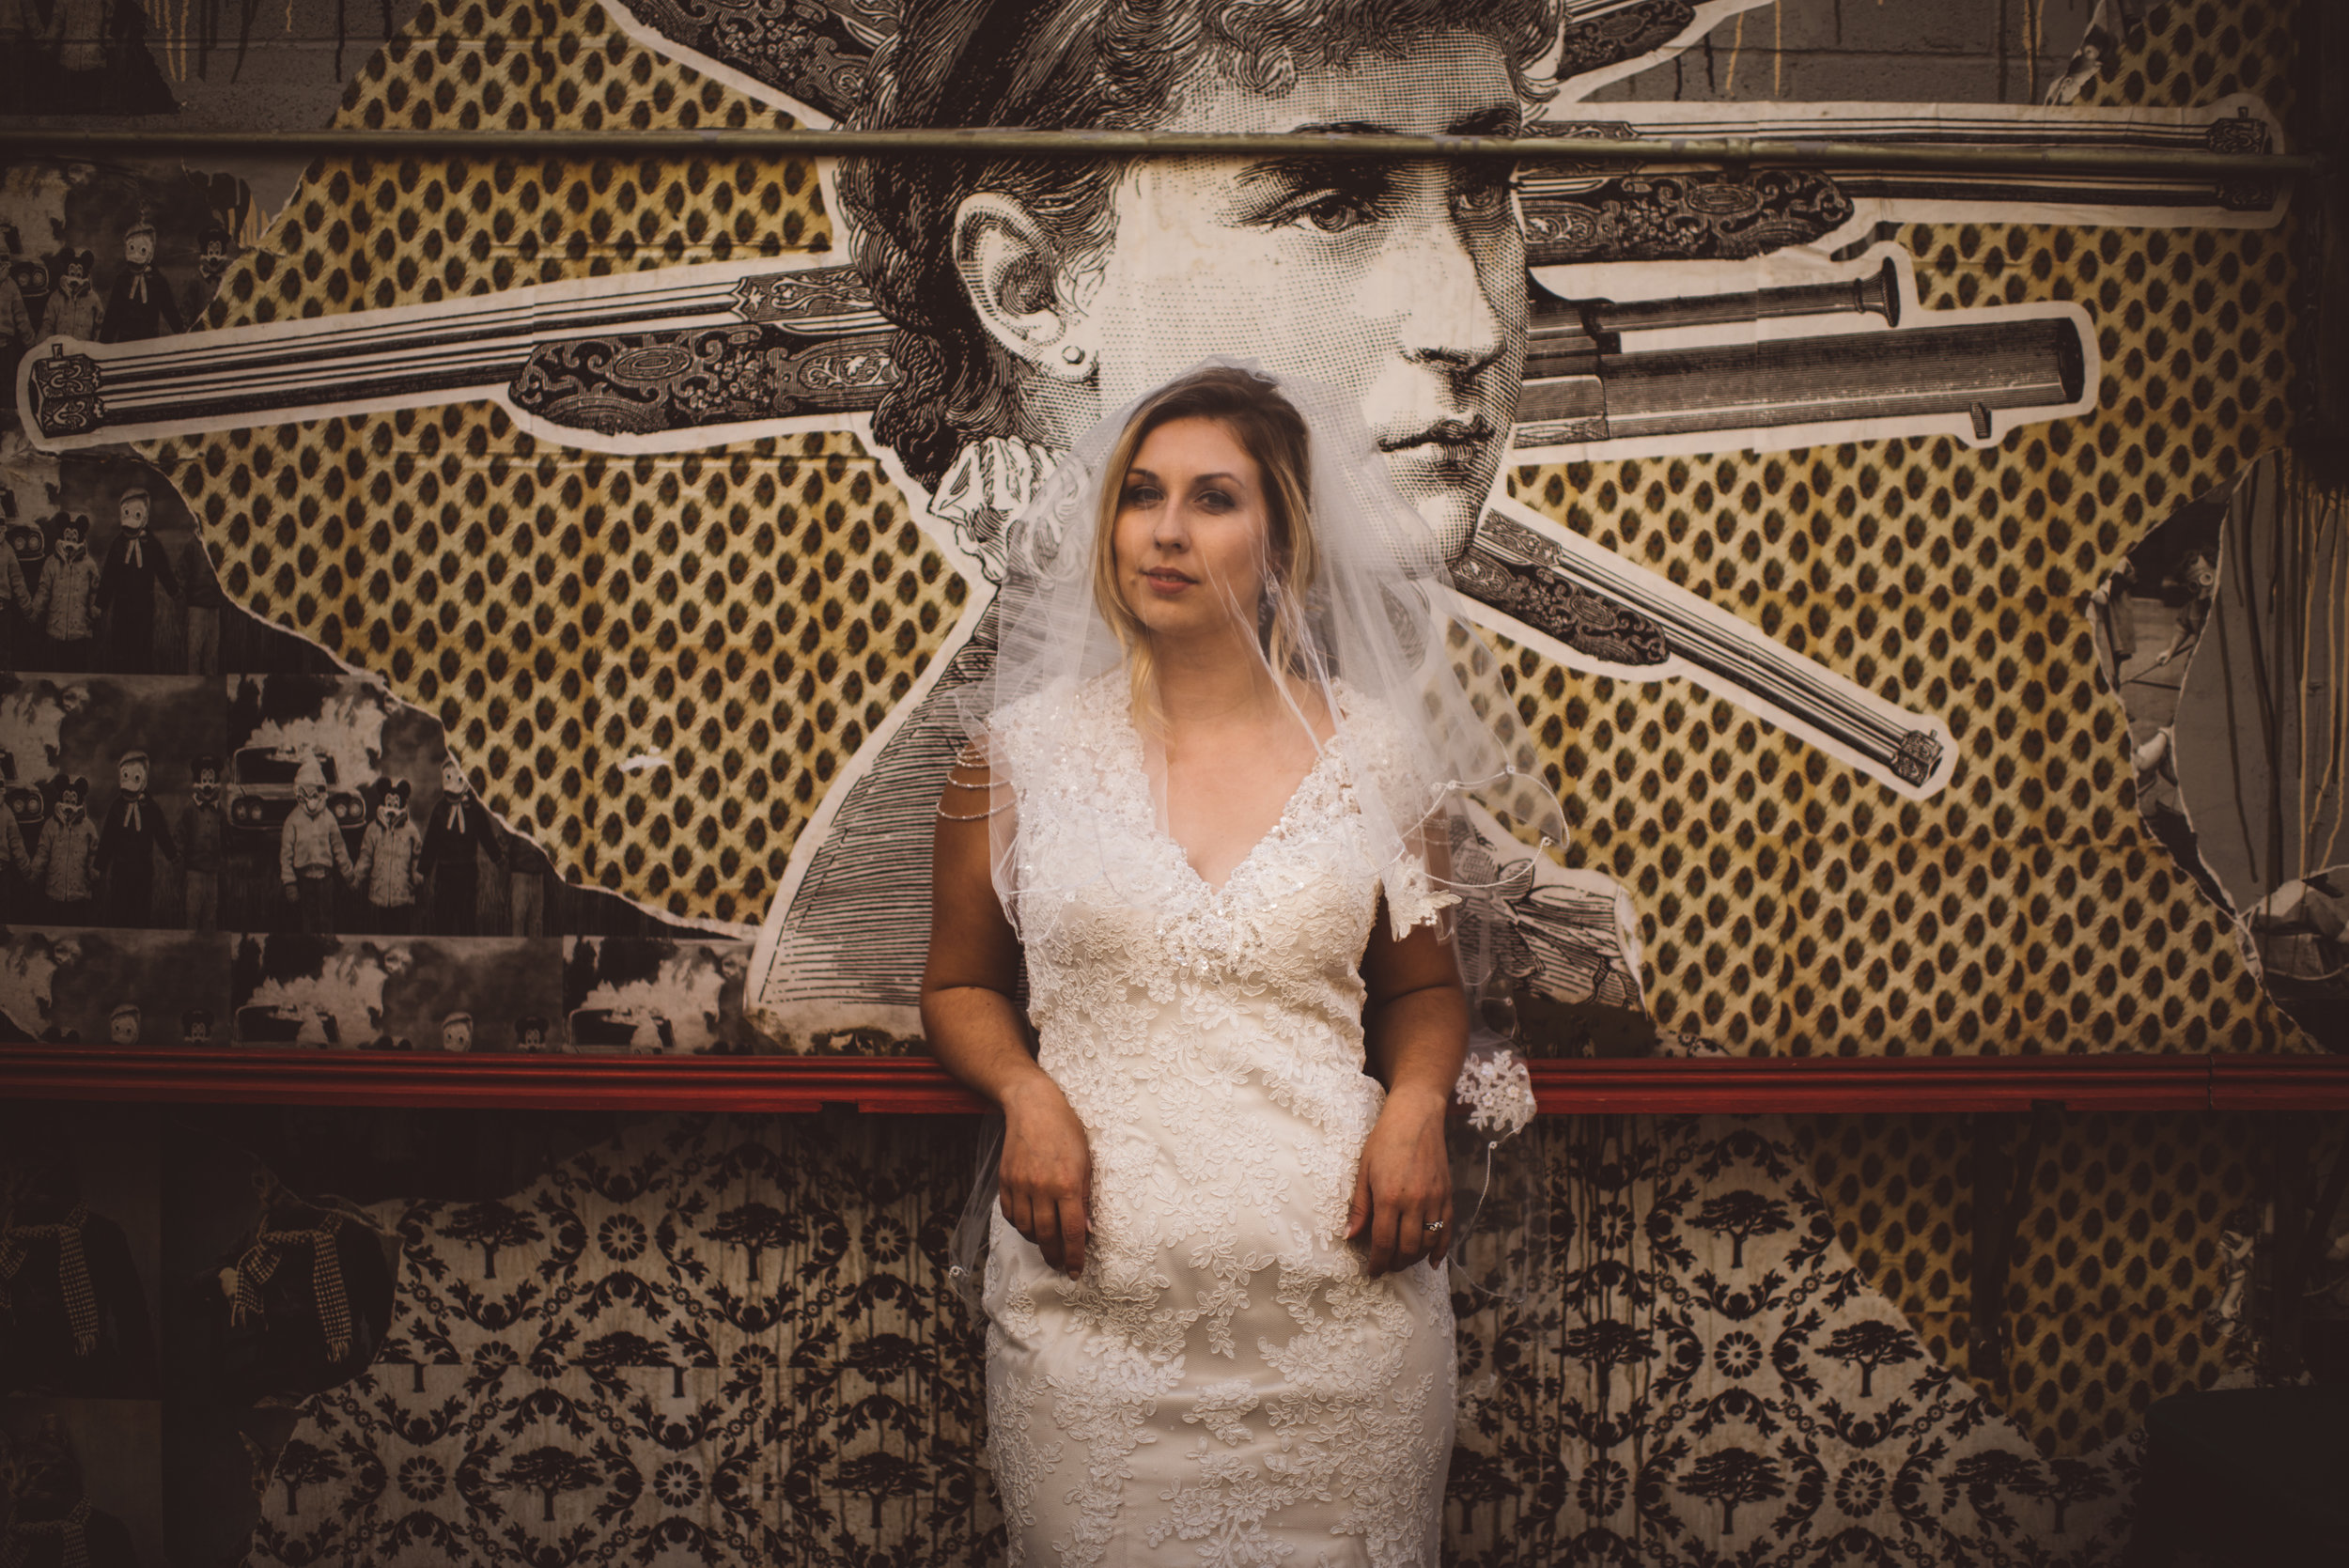 Las Vegas Elopement Photographer Ashley Marie Myers Rock'n Roll Bride-90.jpg